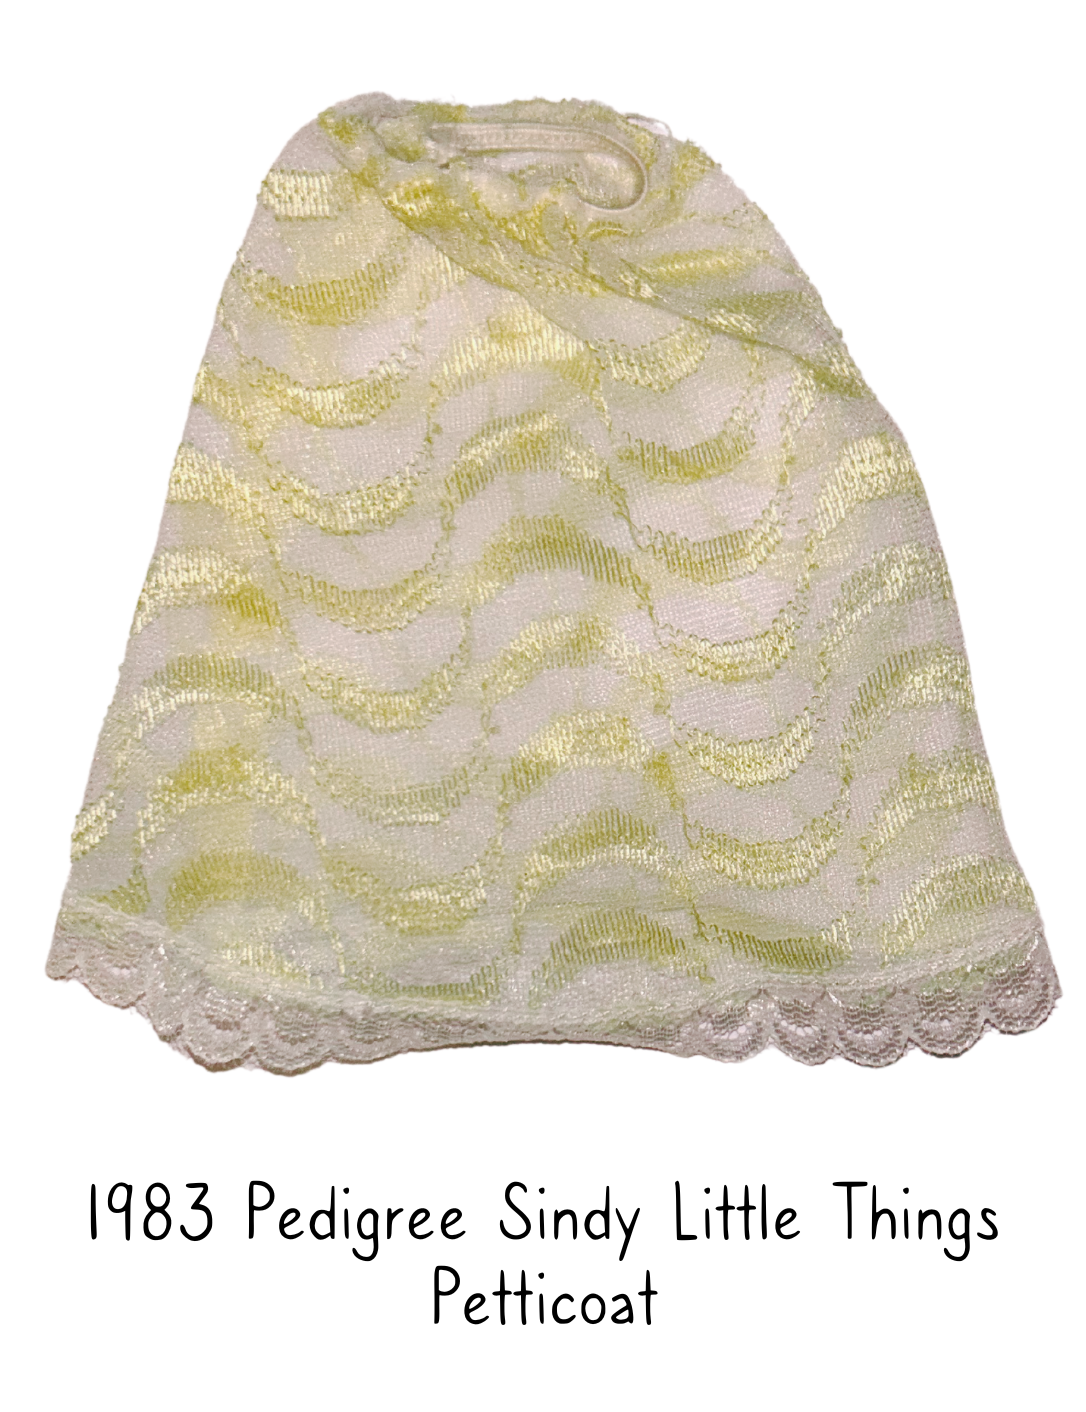 1983 Pedigree Sindy Little Things Lingerie Petticoat